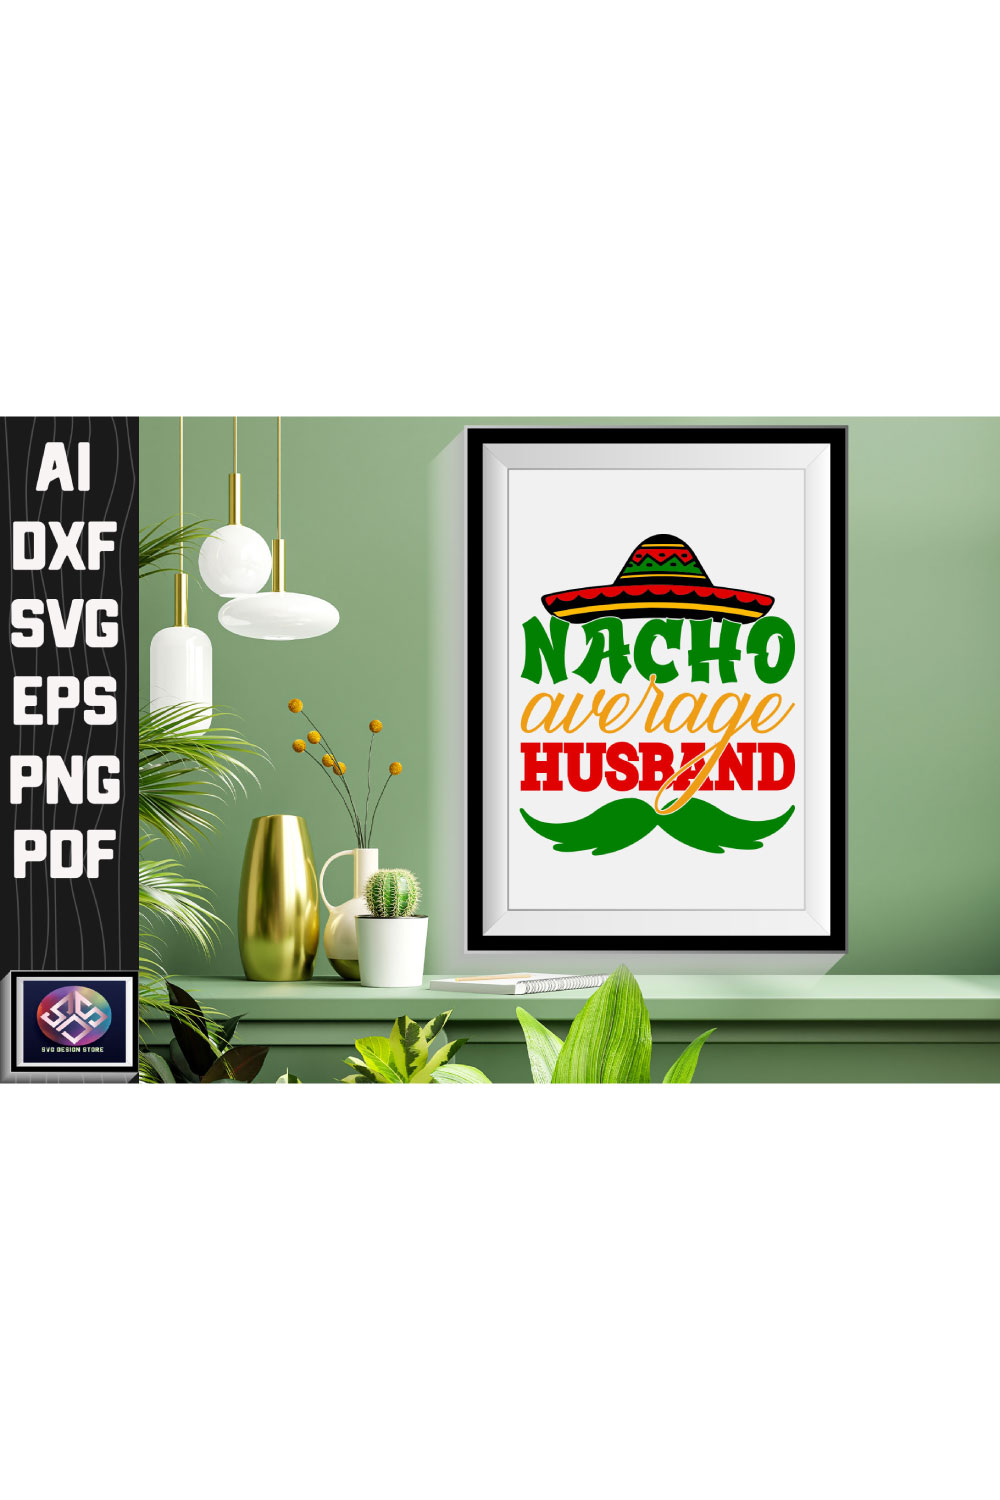 Nacho Average Husband pinterest preview image.